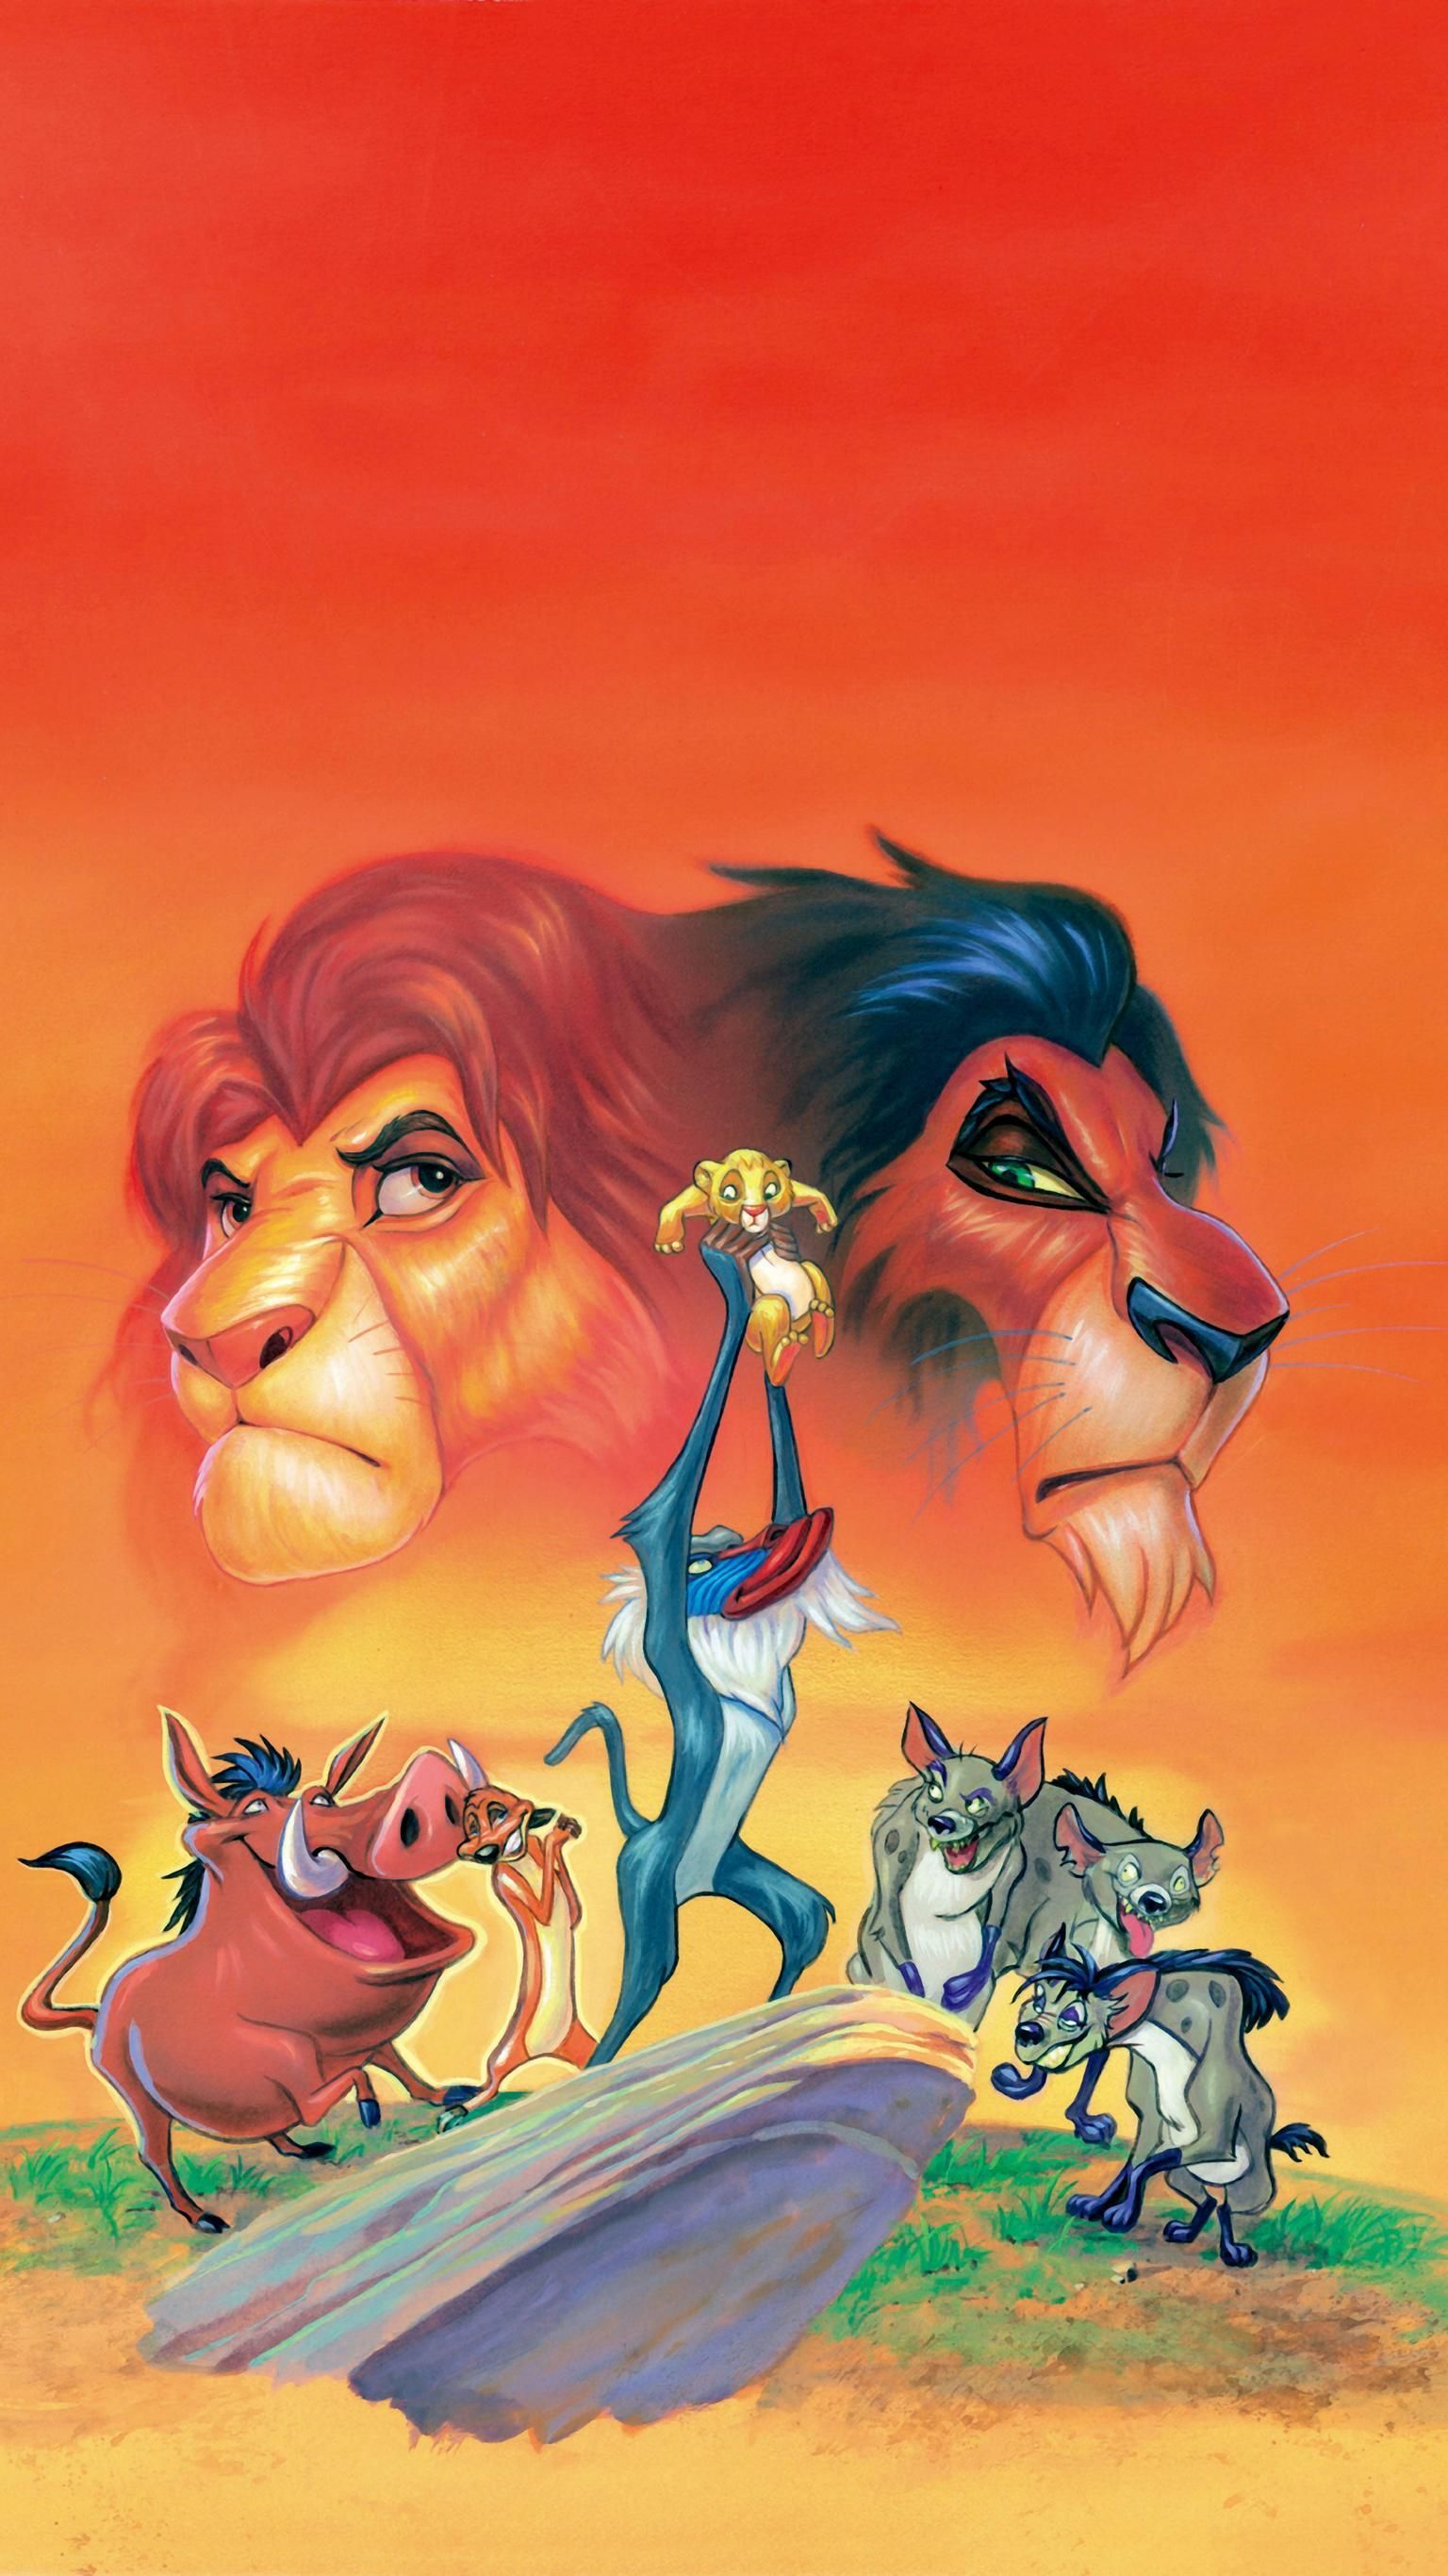 The Lion King (1994) Phone Wallpaper. Lion king poster